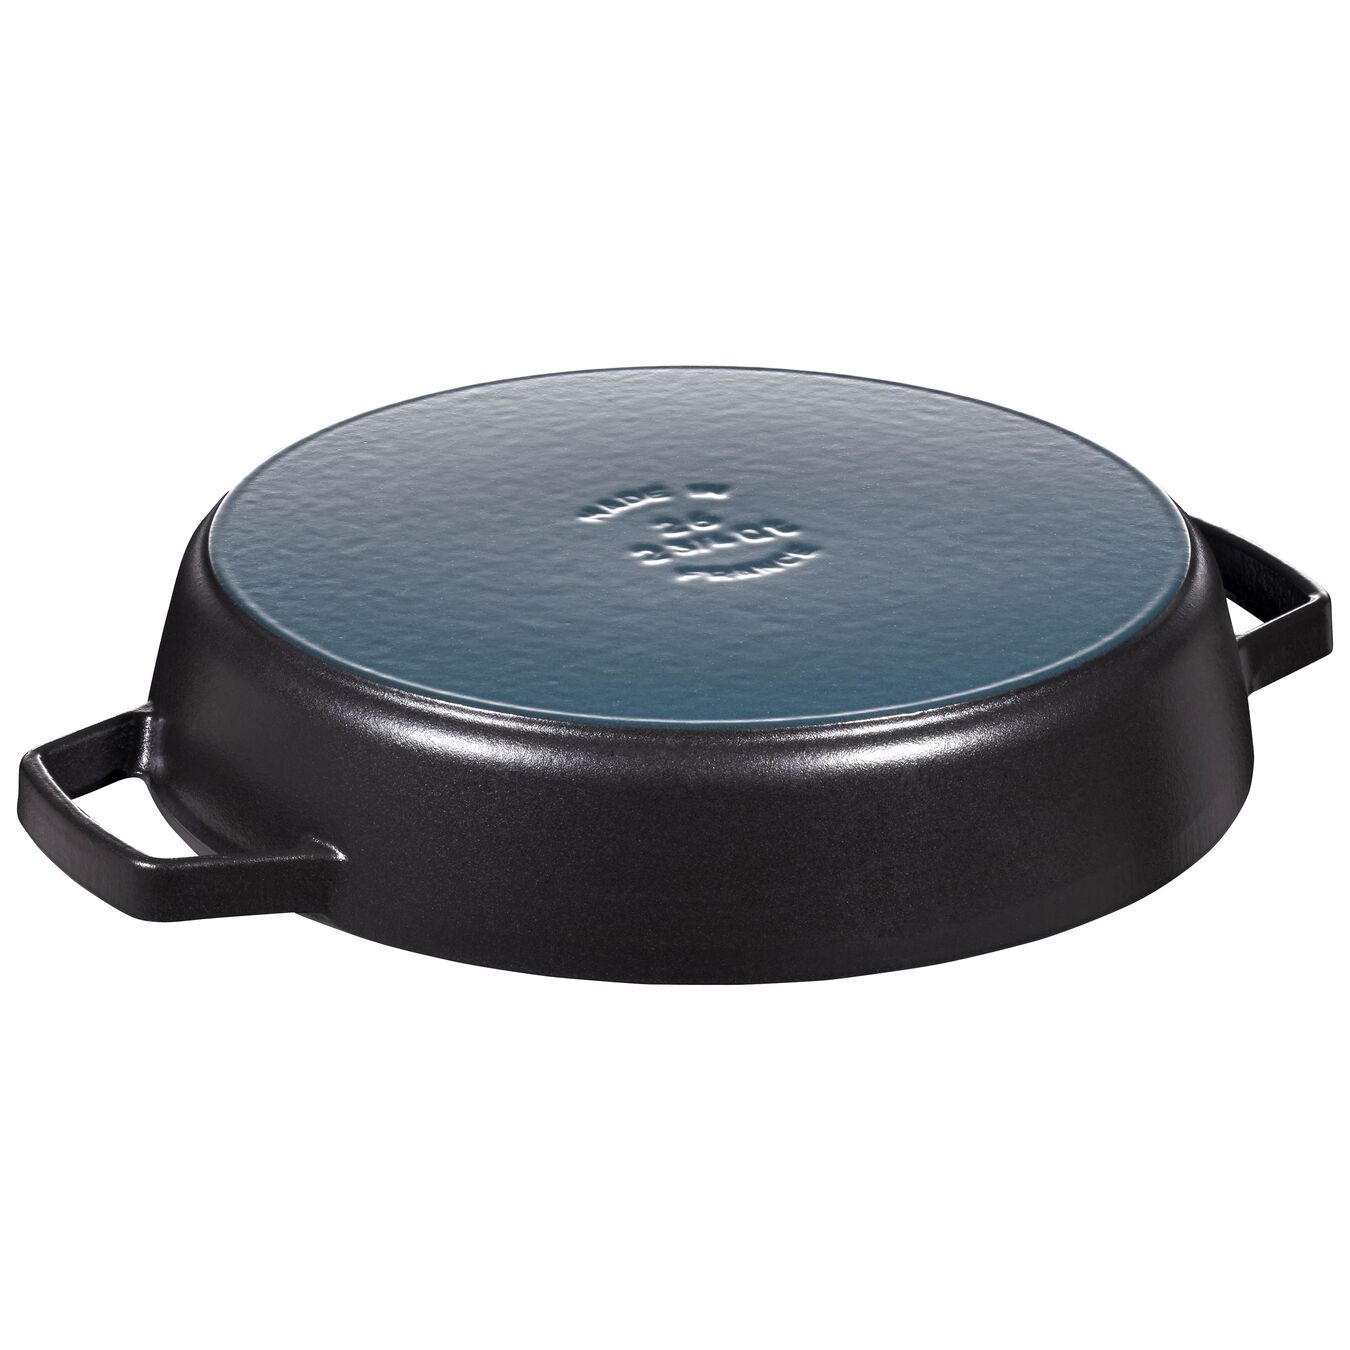 26 cm Cast iron Frying pan black,,large 2